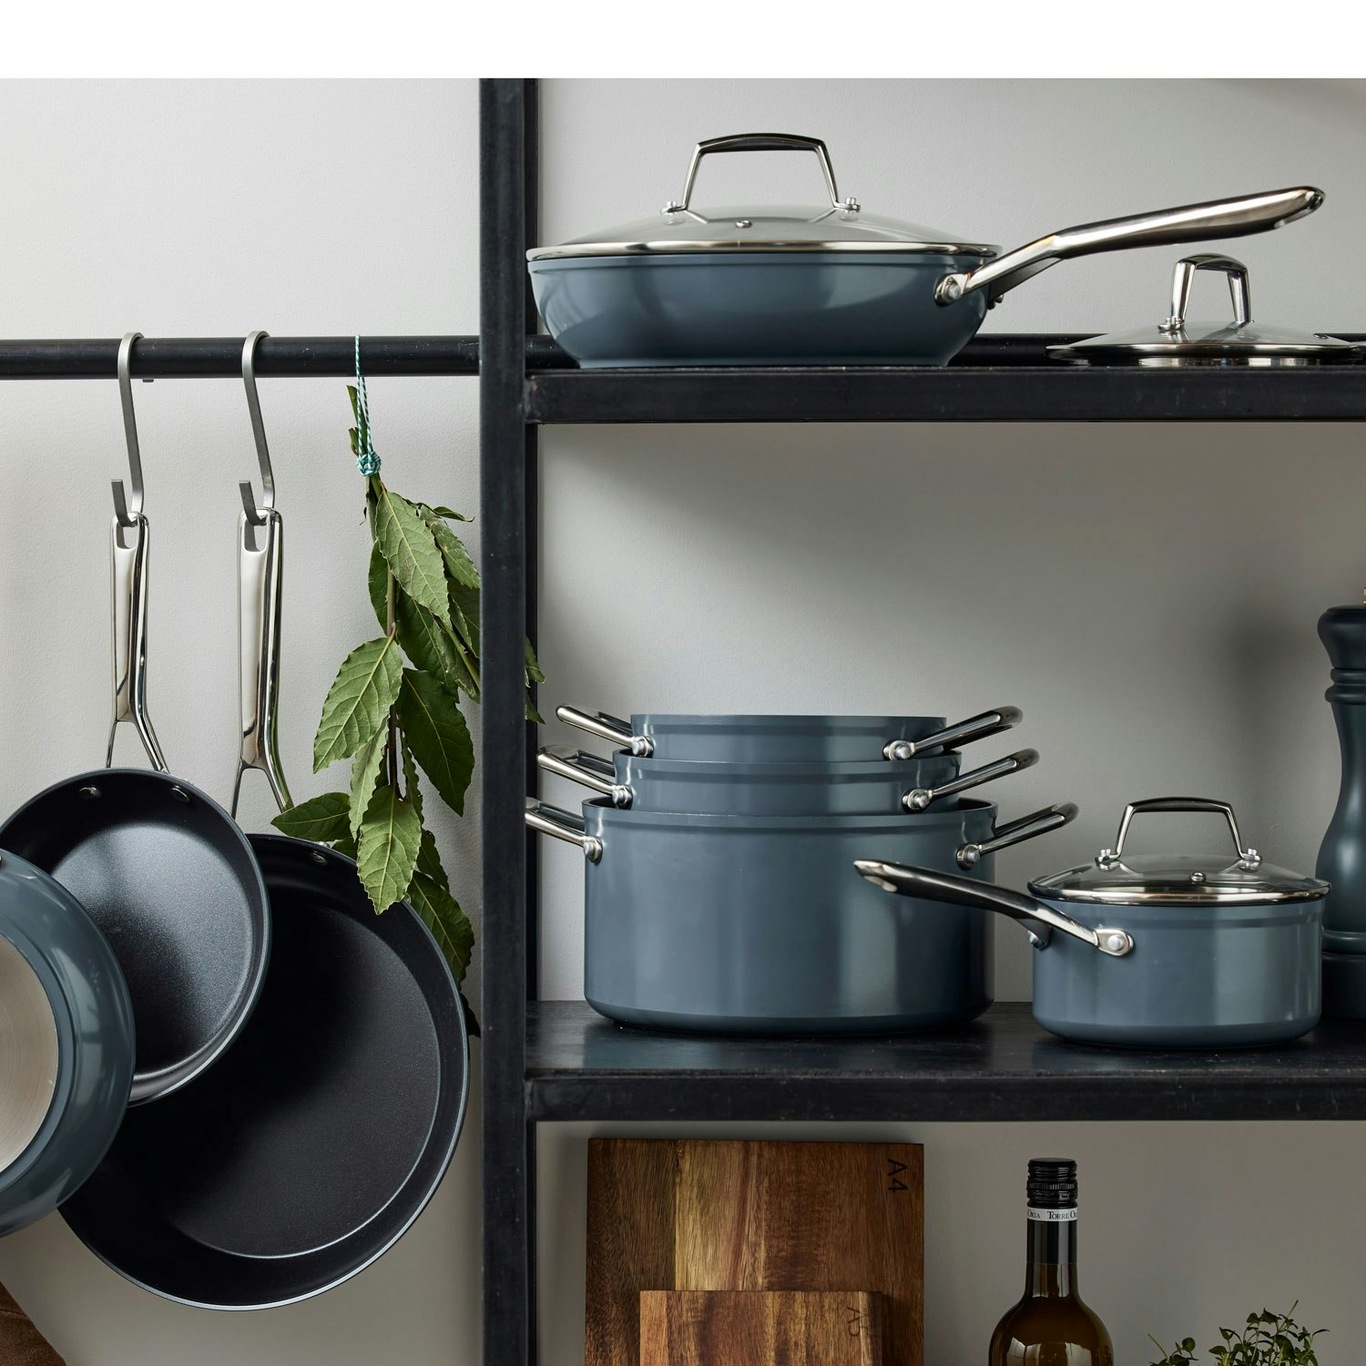 https://royaldesign.com/image/2/kitchenware-by-tareq-taylor-vivian-saute-pan-26-cm-25-l-2?w=800&quality=80